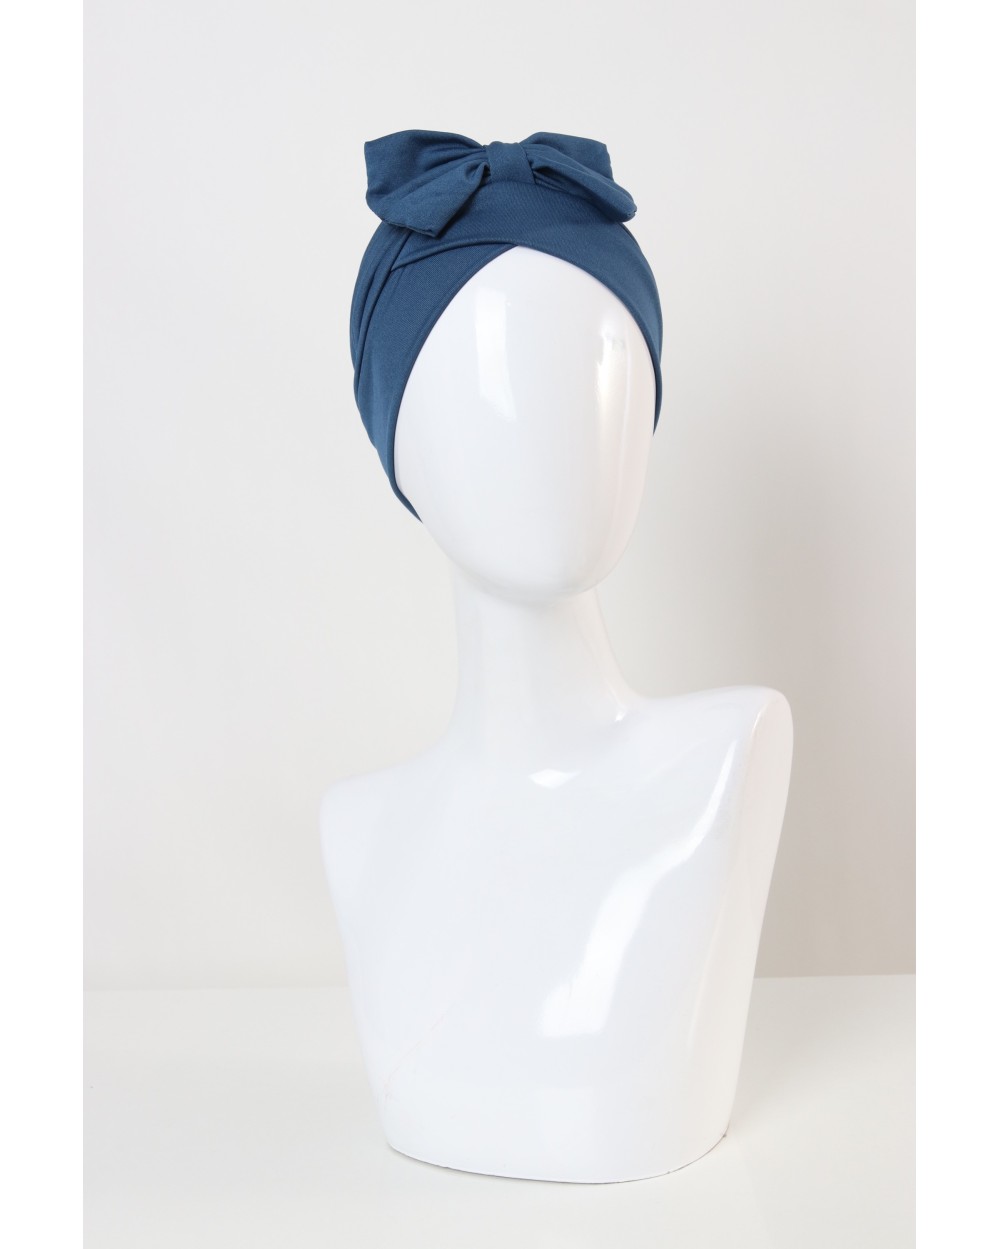 Pull-on bow tie turban